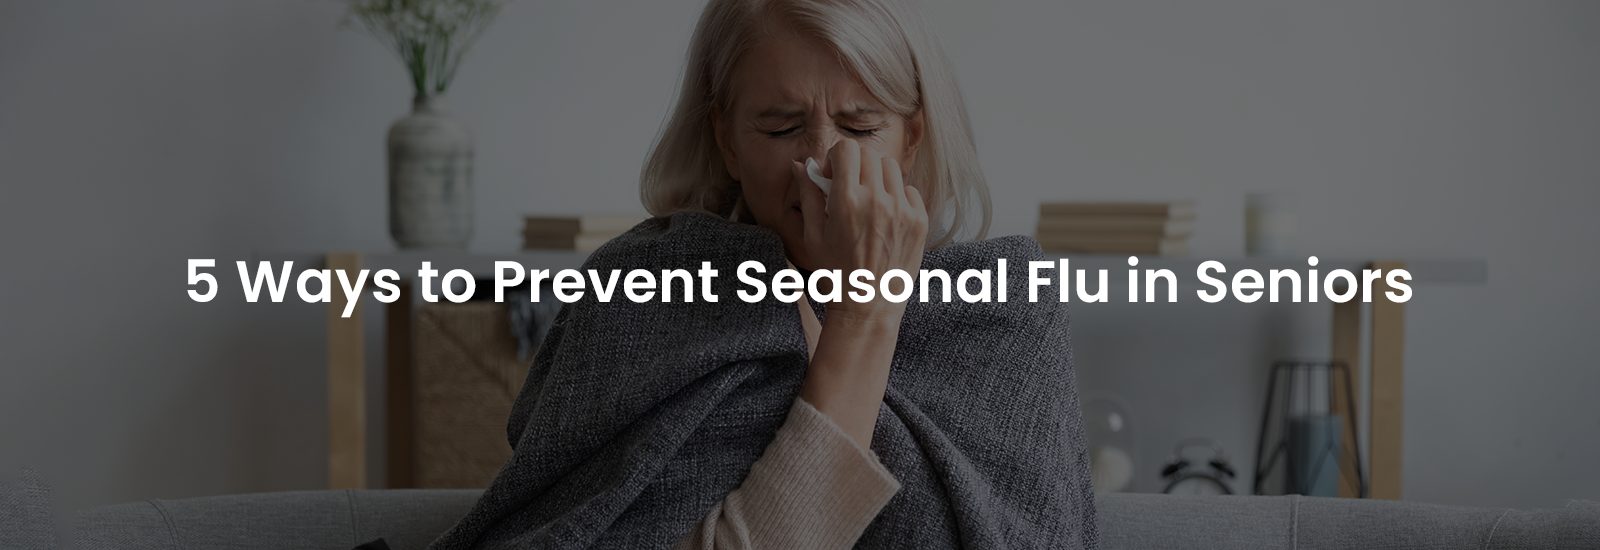 5 Ways to Prevent Seasonal Flu in Seniors | Banner Image